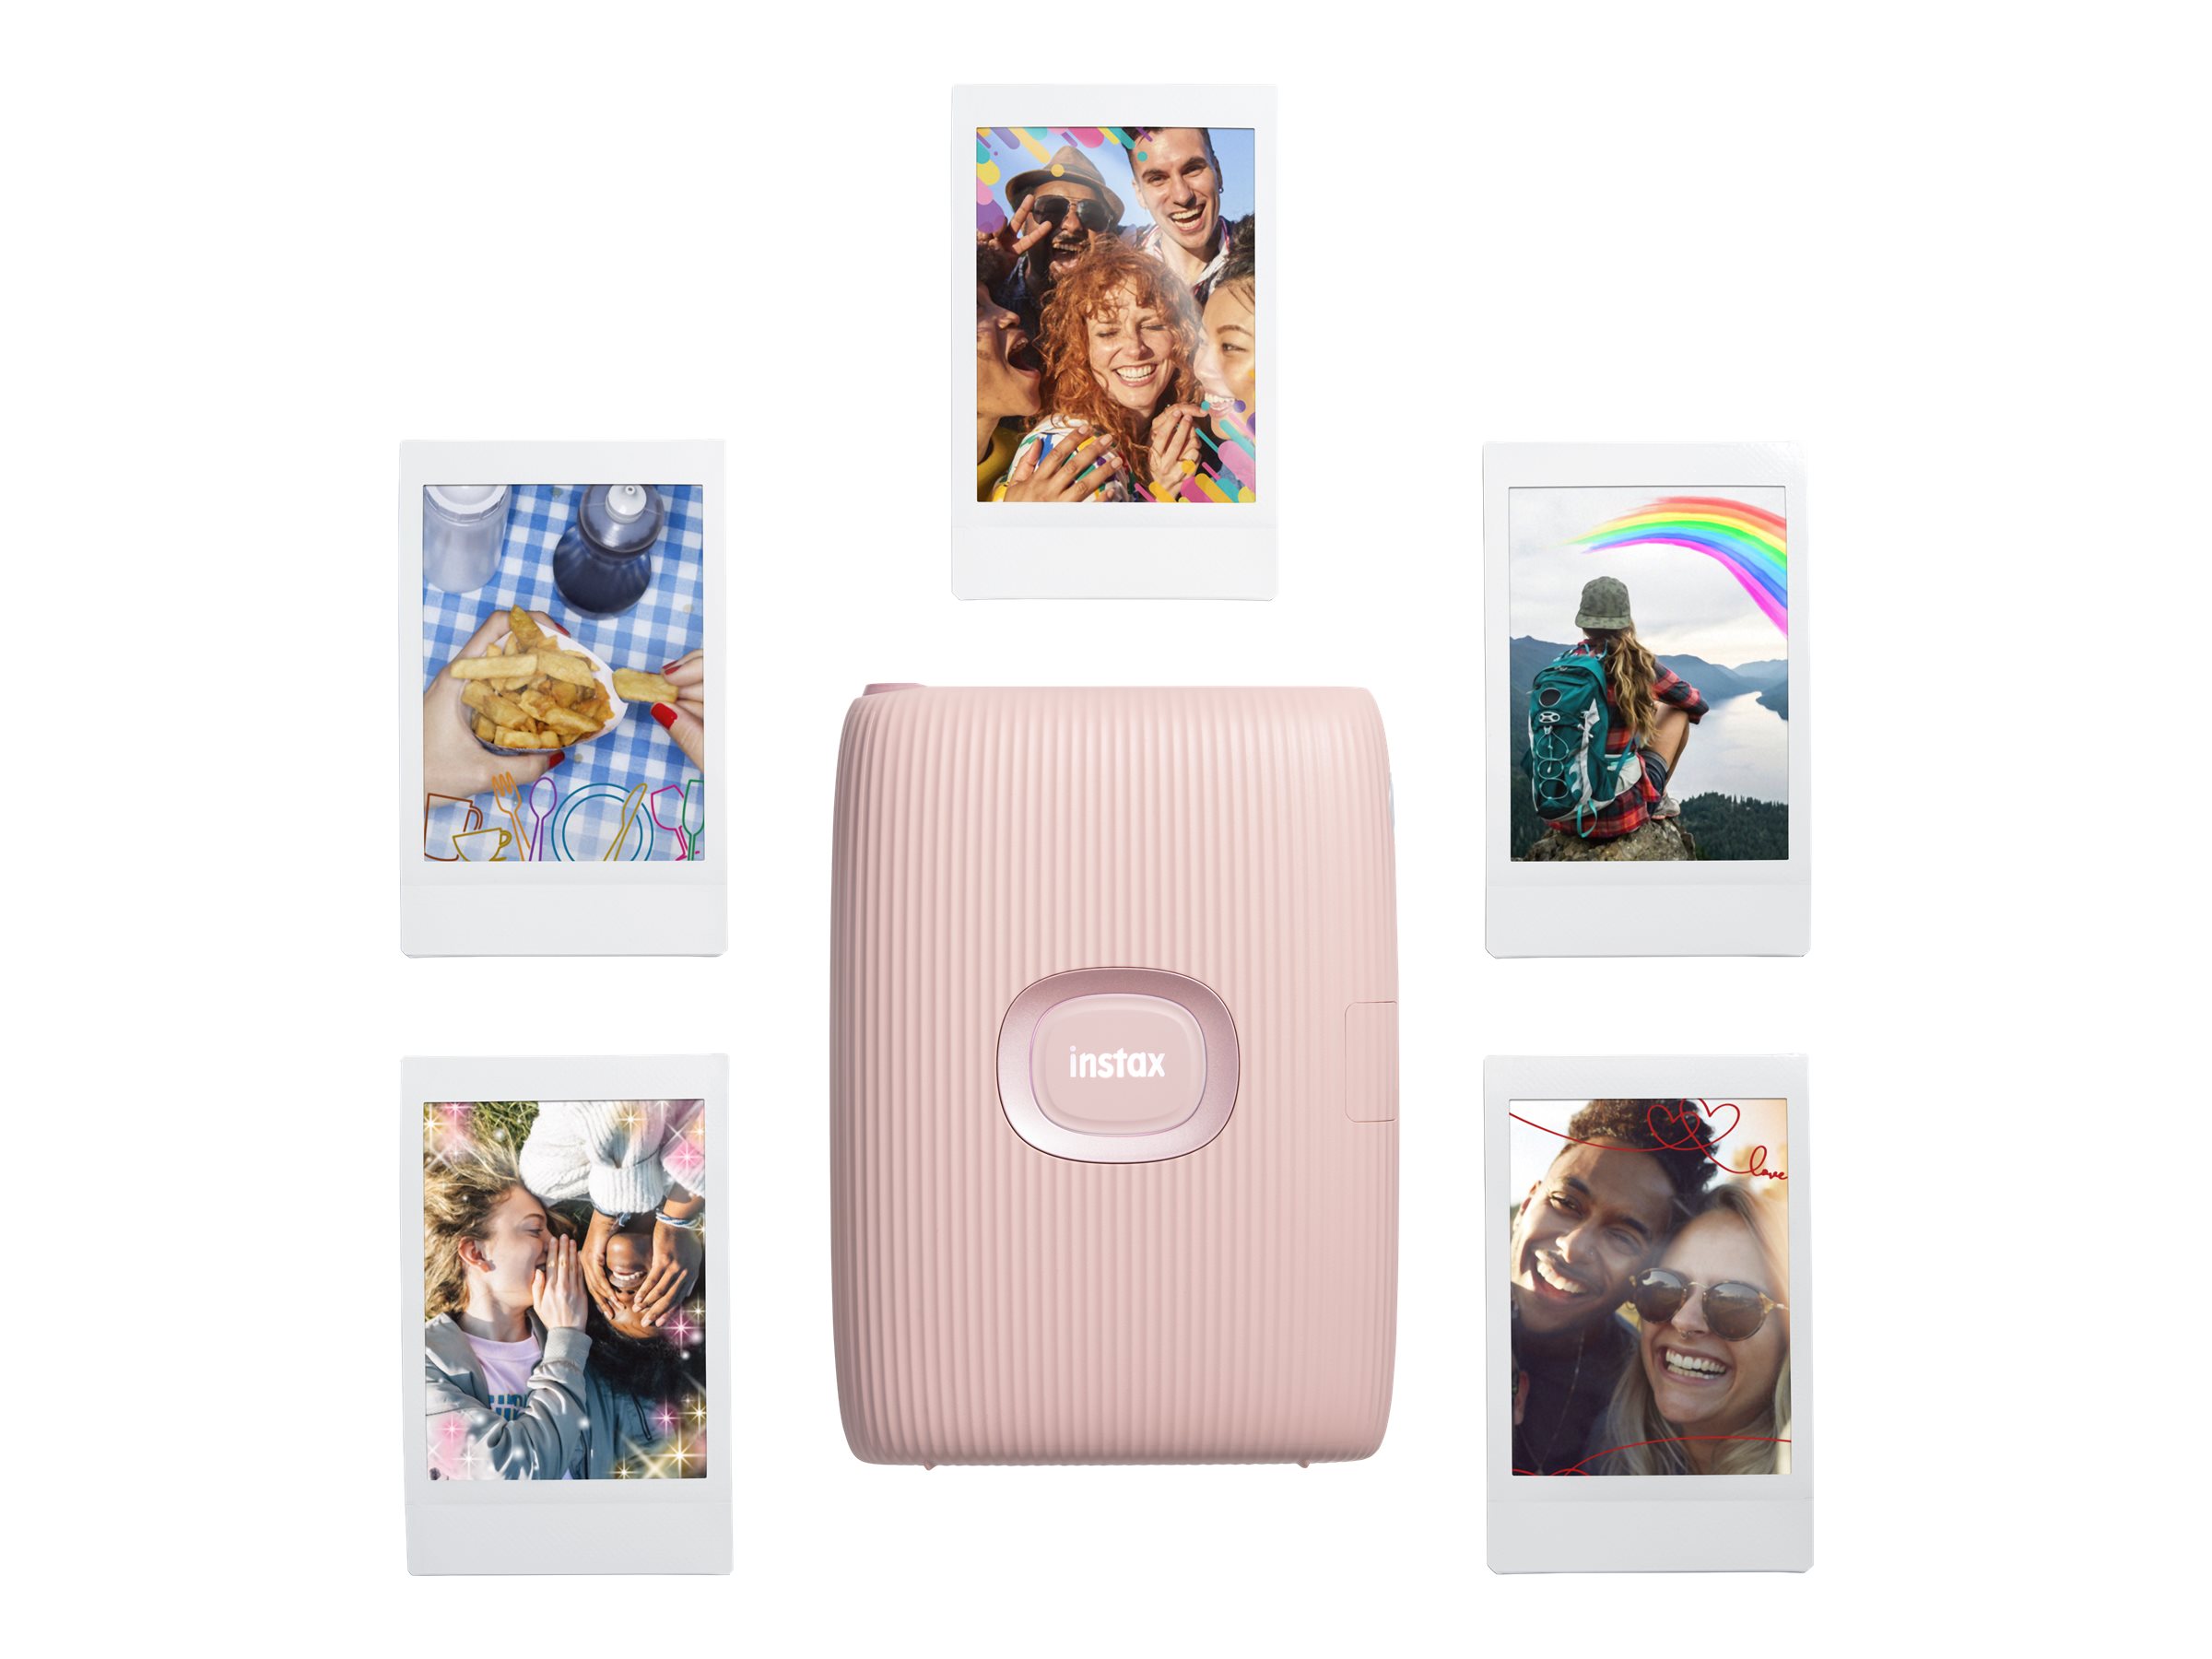 Fujifilm Instax Mini Link 2 Compact Photo Printer - Soft Pink